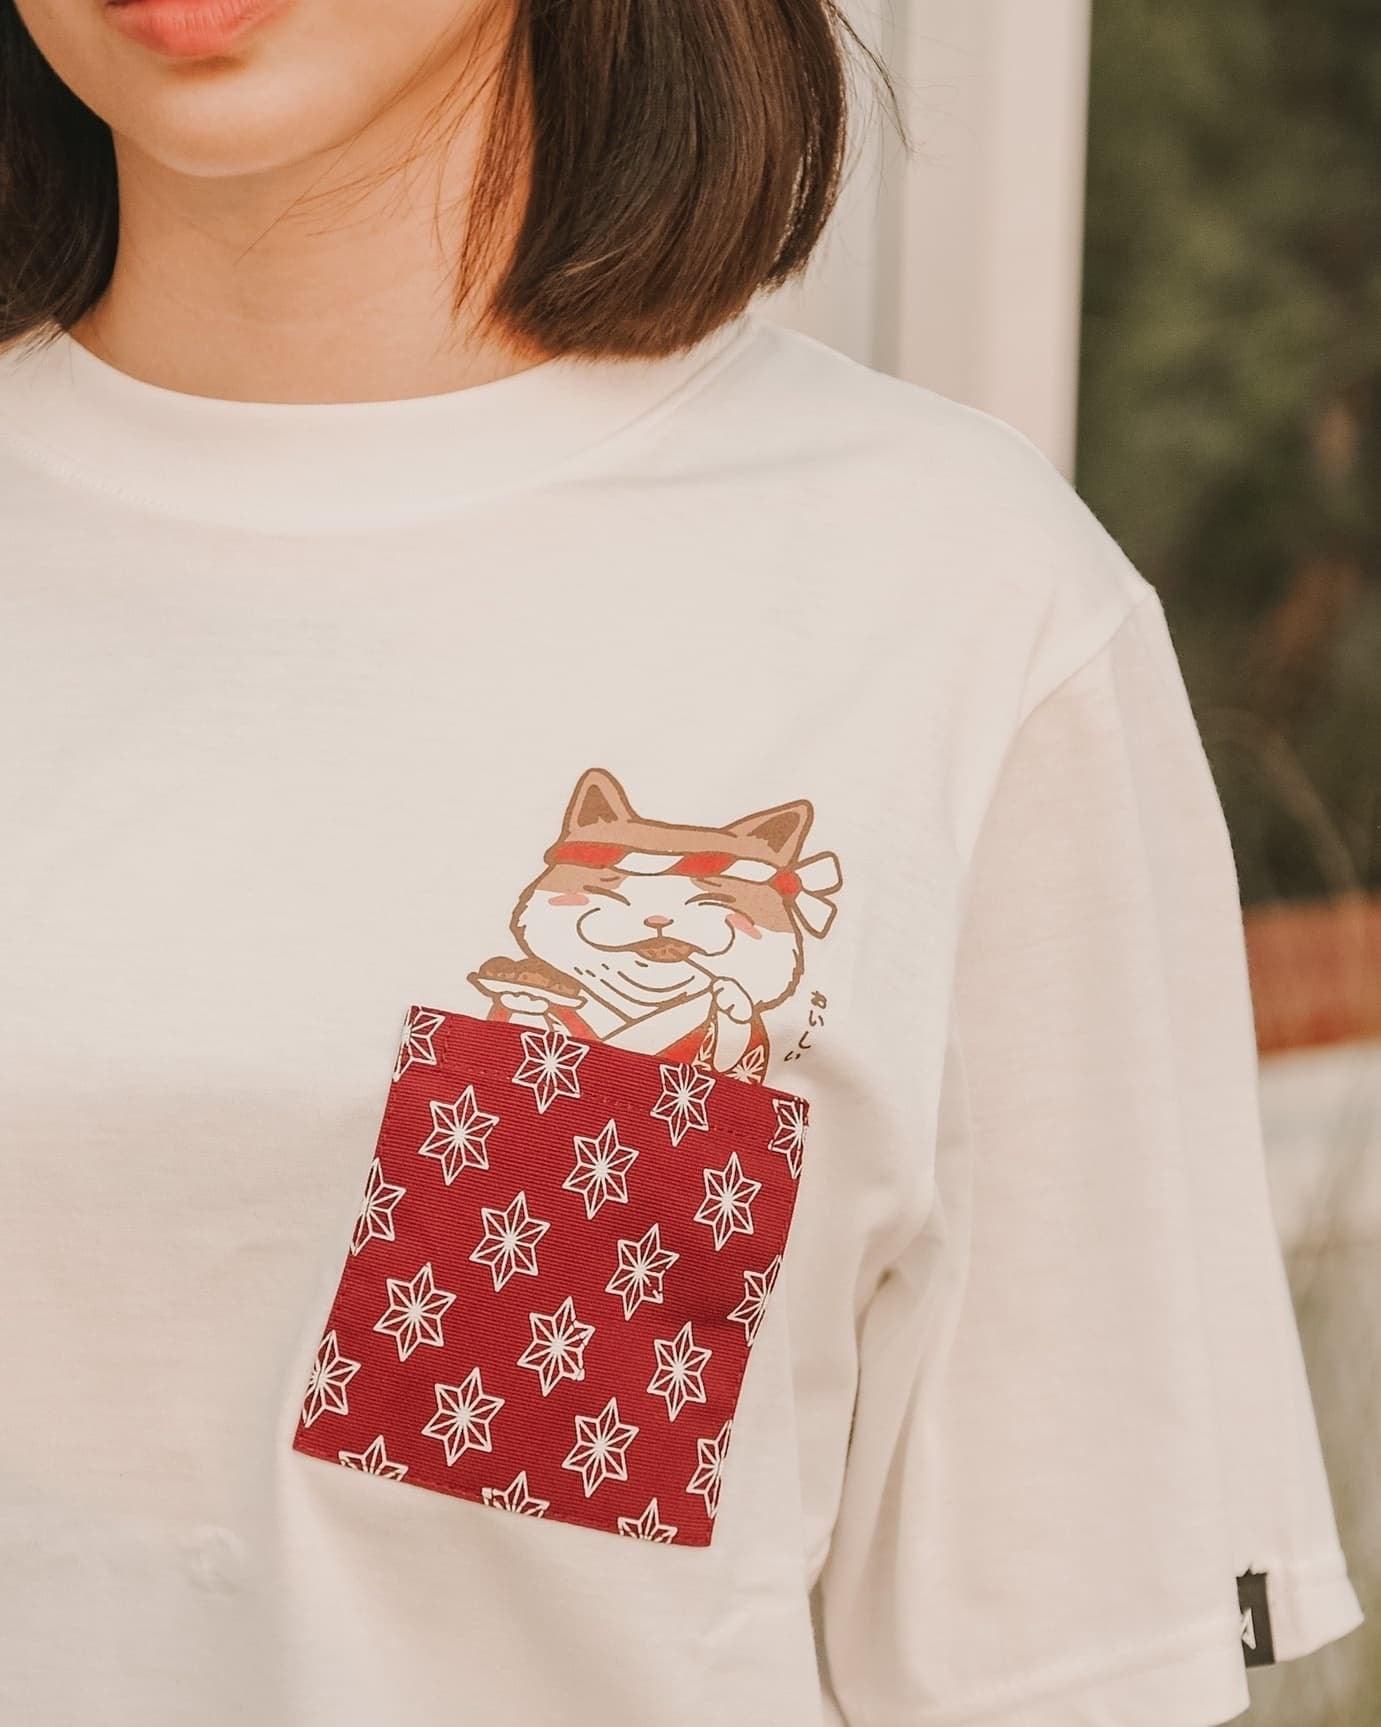 Datclothing - Women wearing white T-Shirt with Takoyaki Neko (cat) print and pocket